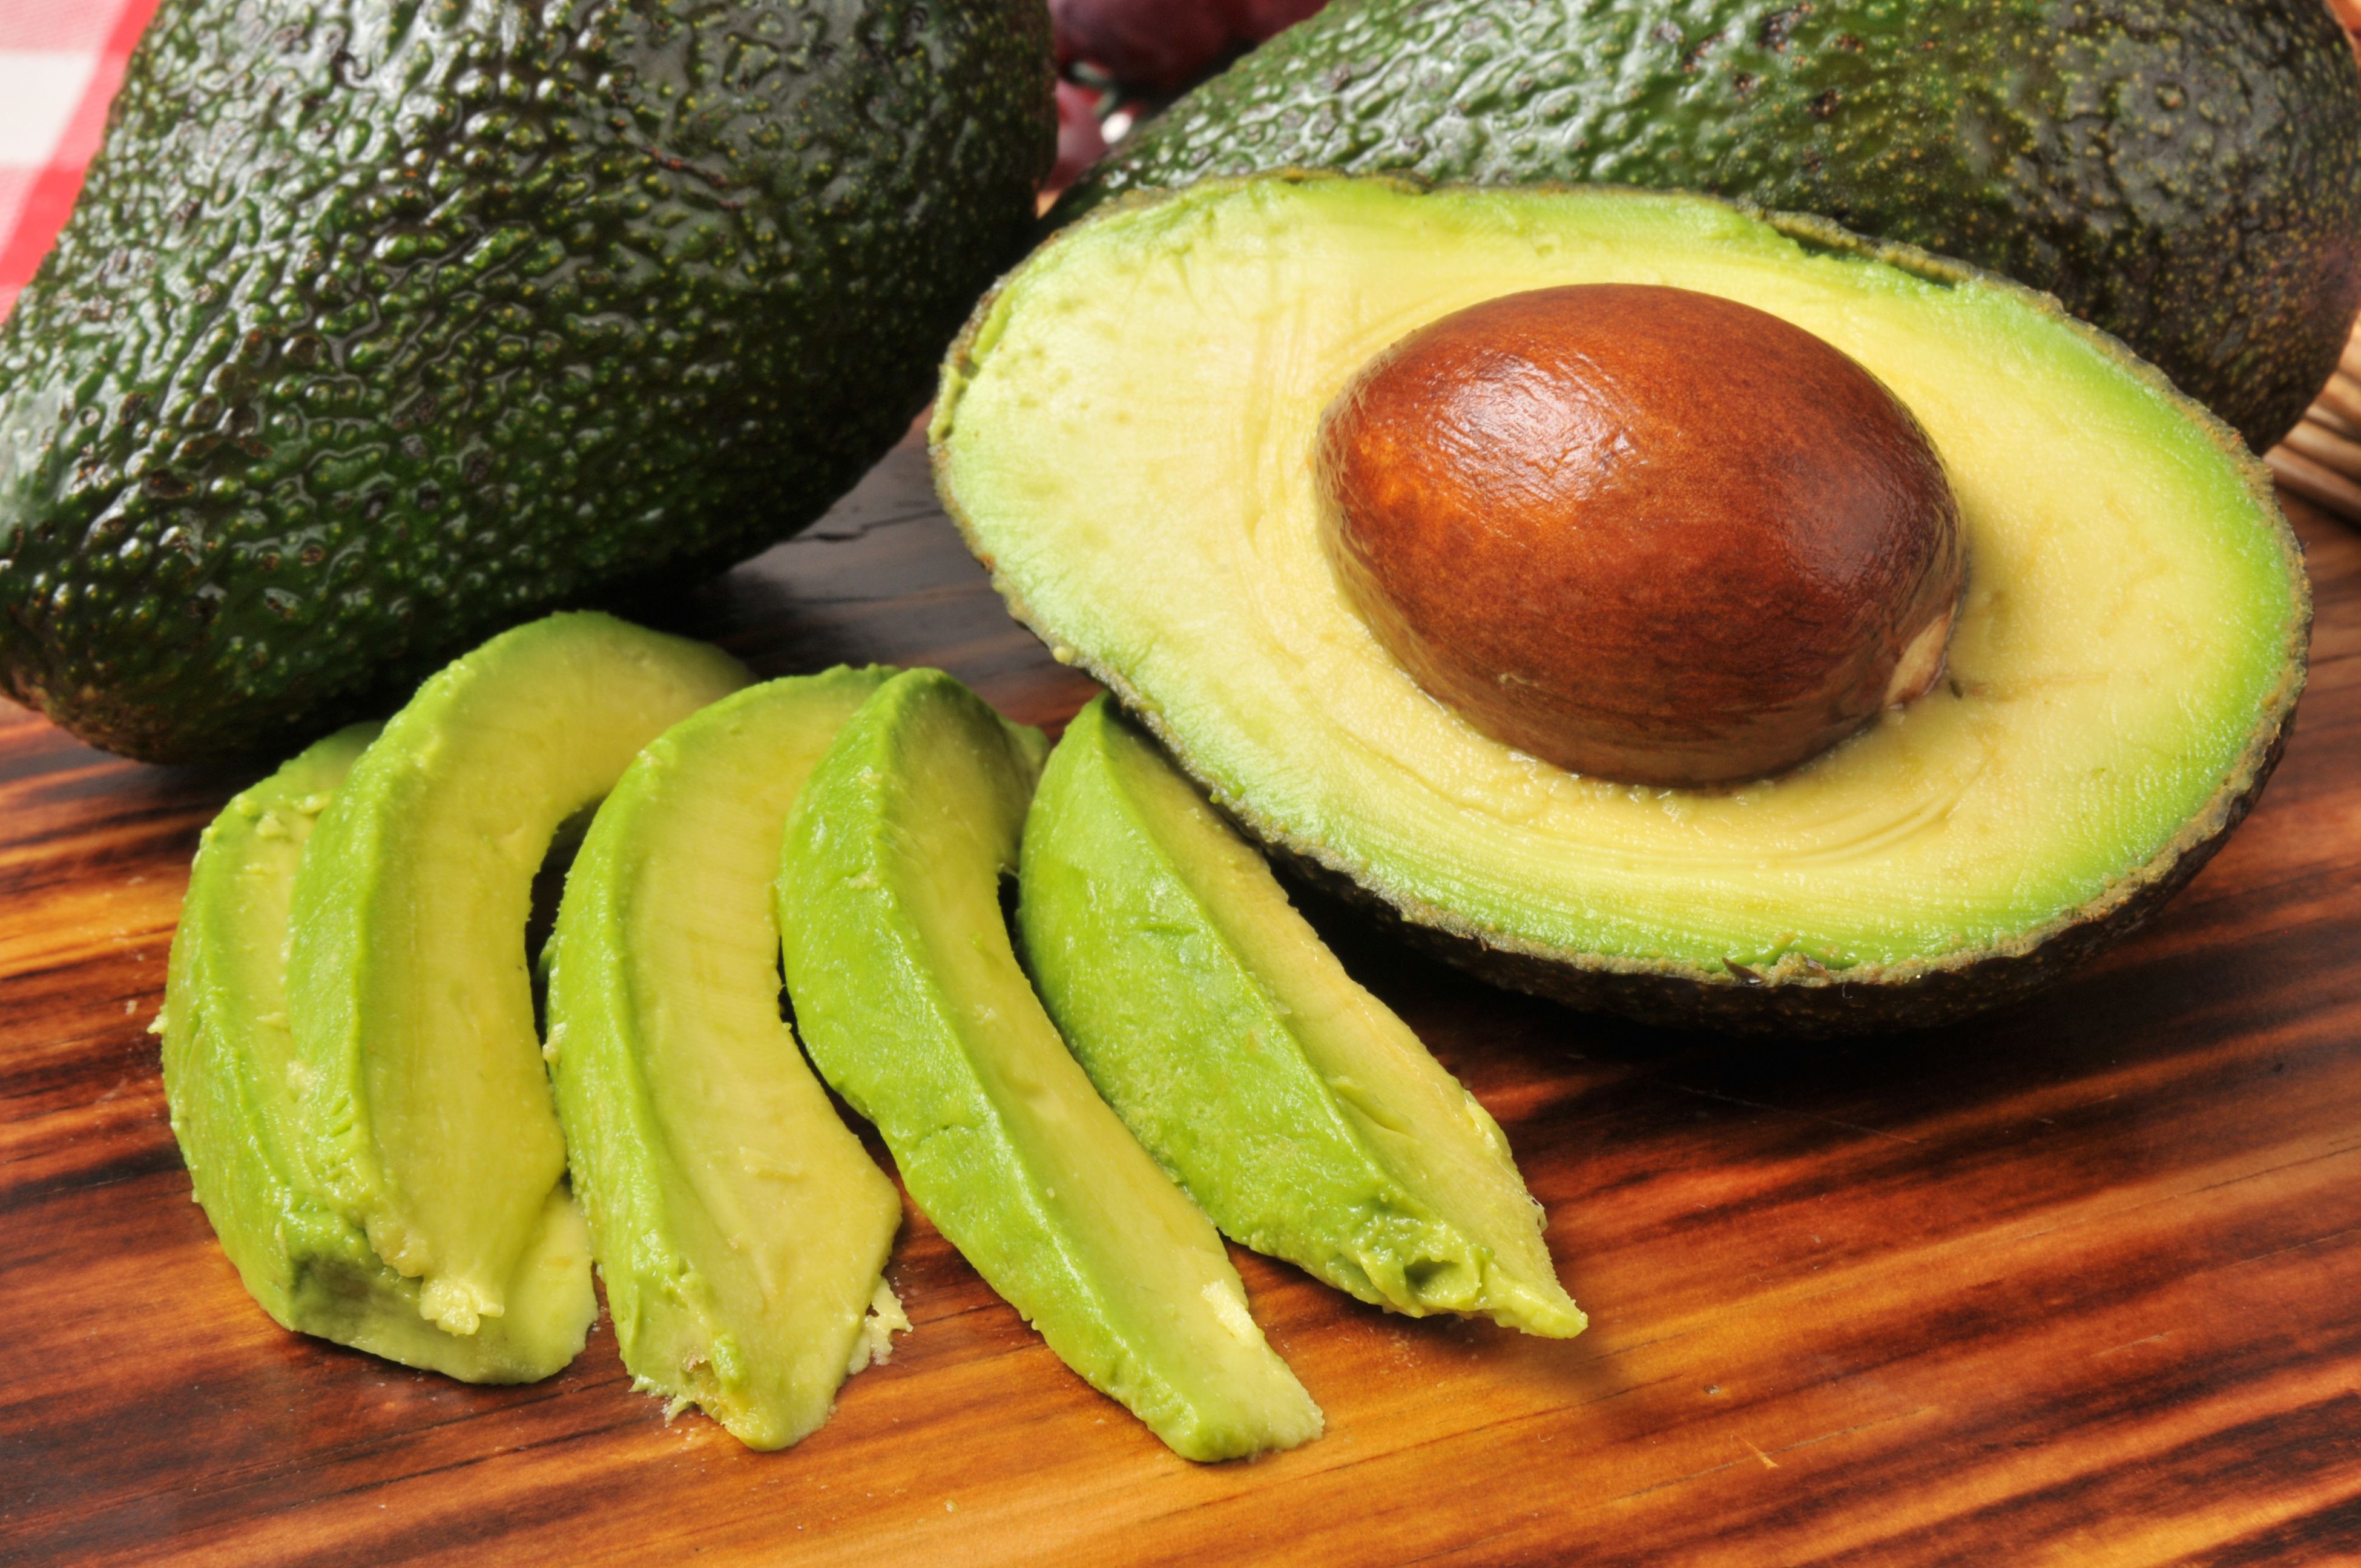 What wild animal eats avocados?